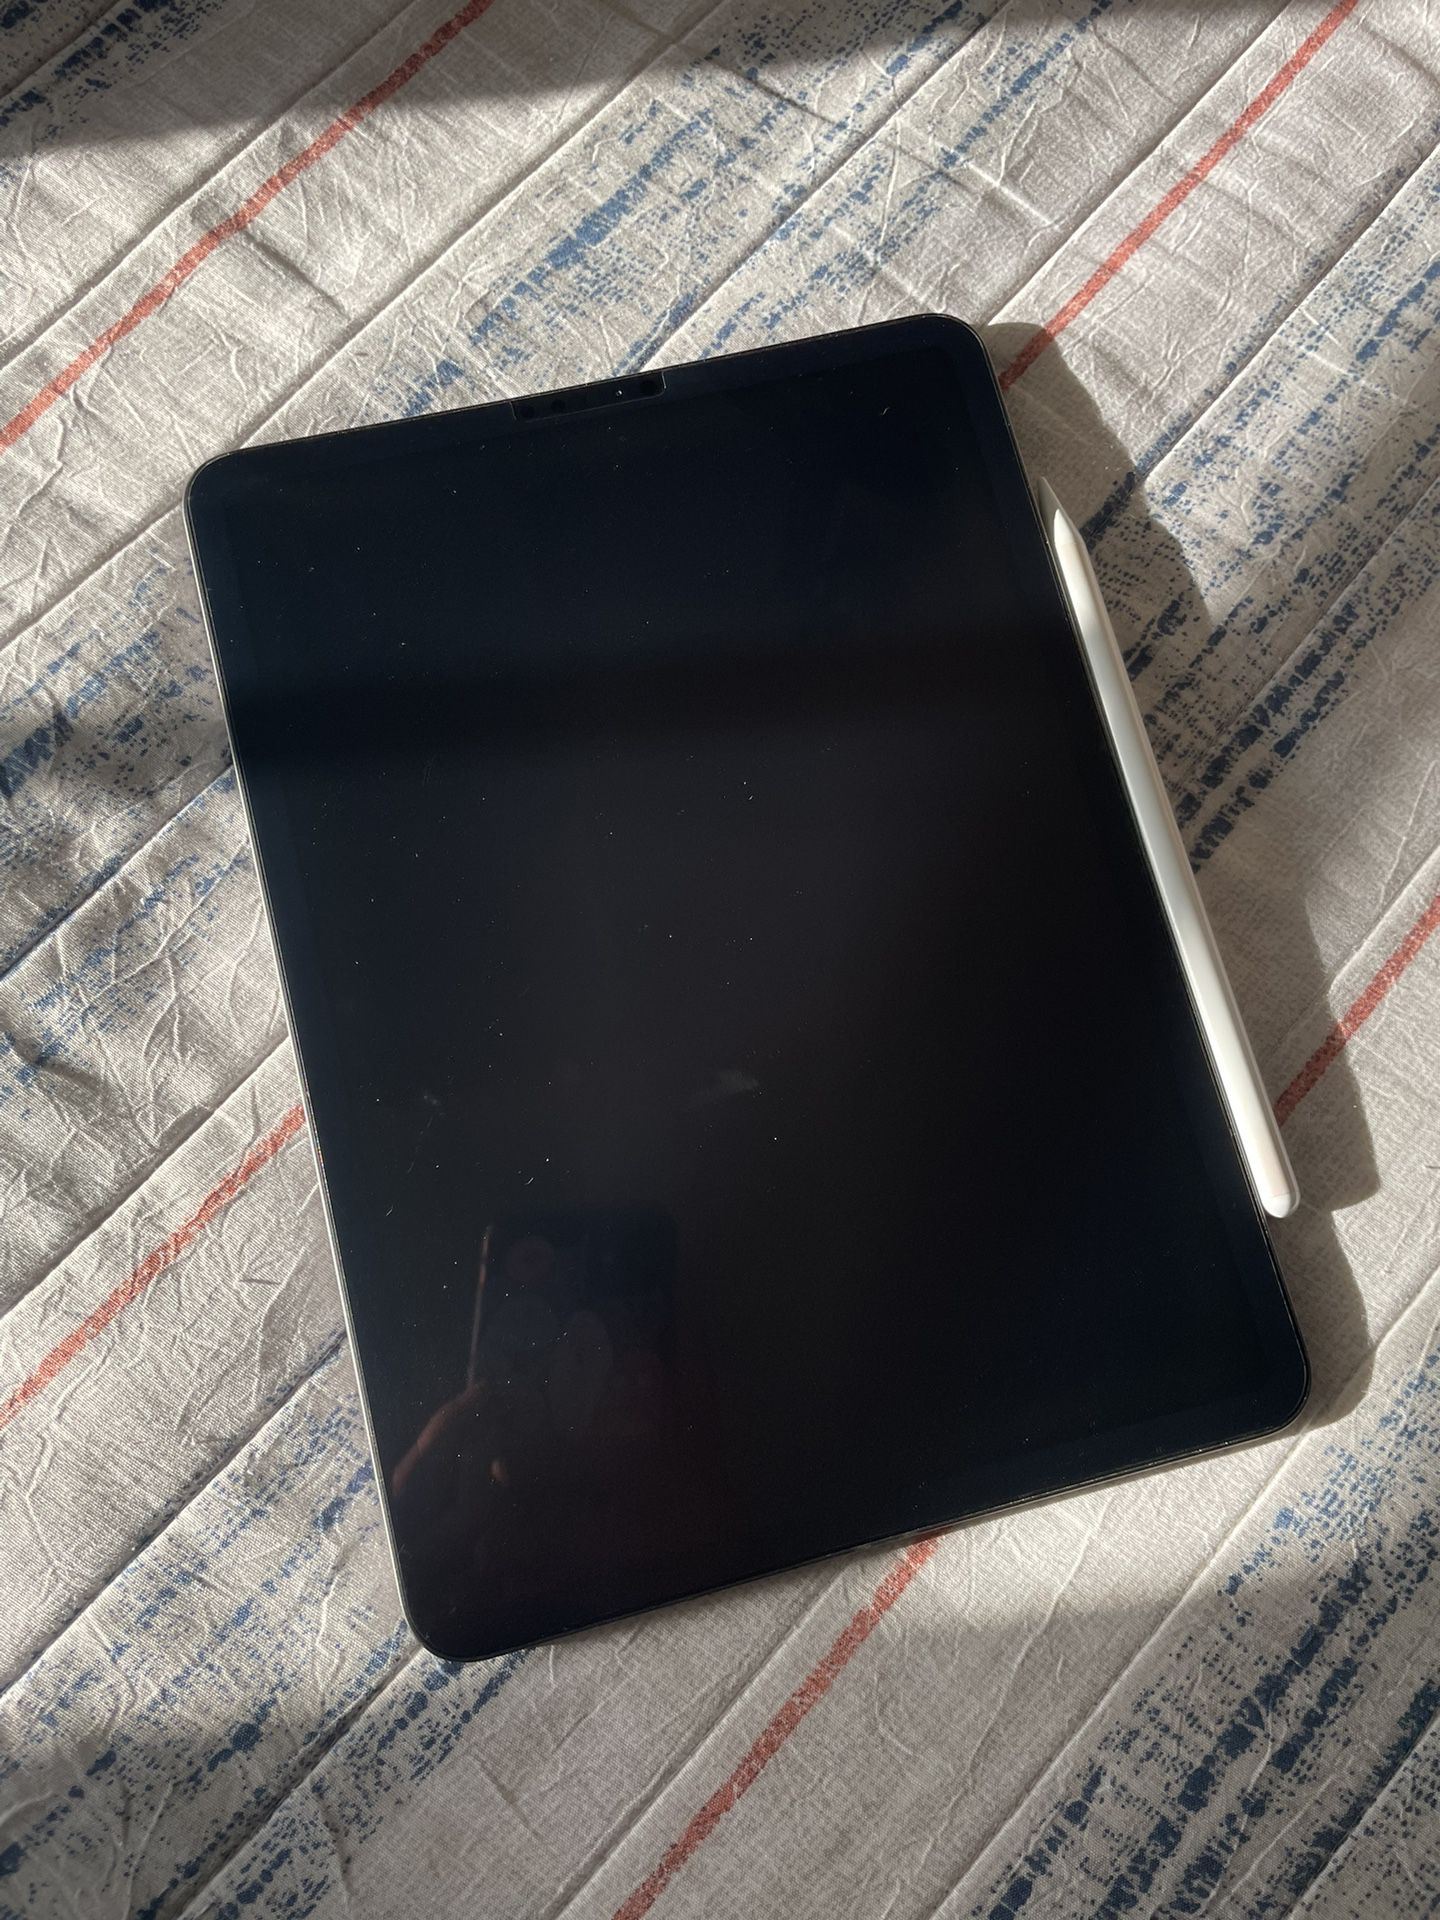 iPad Pro 2018 - 11 inch